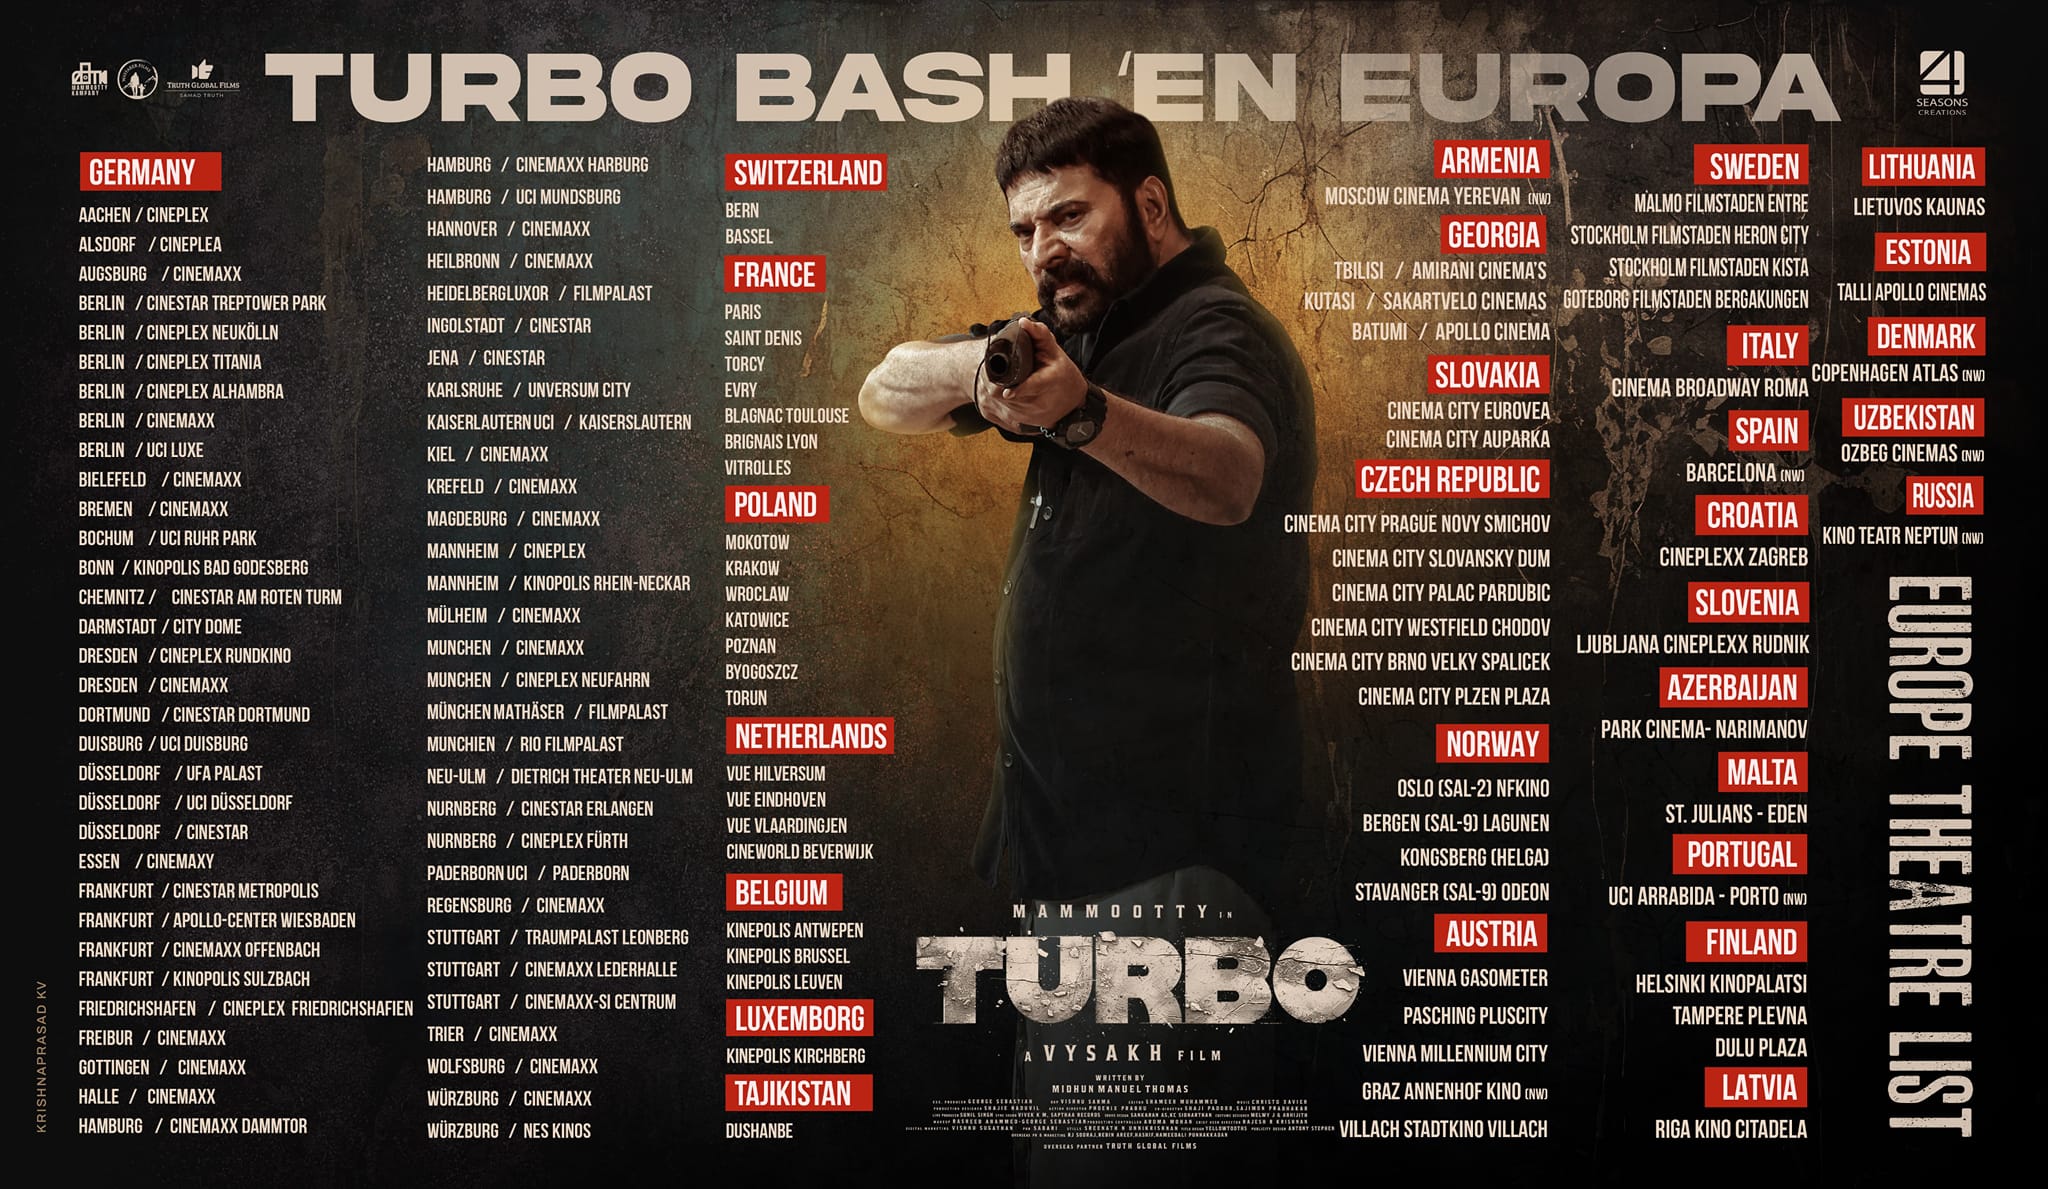 Turbo theatre list 2